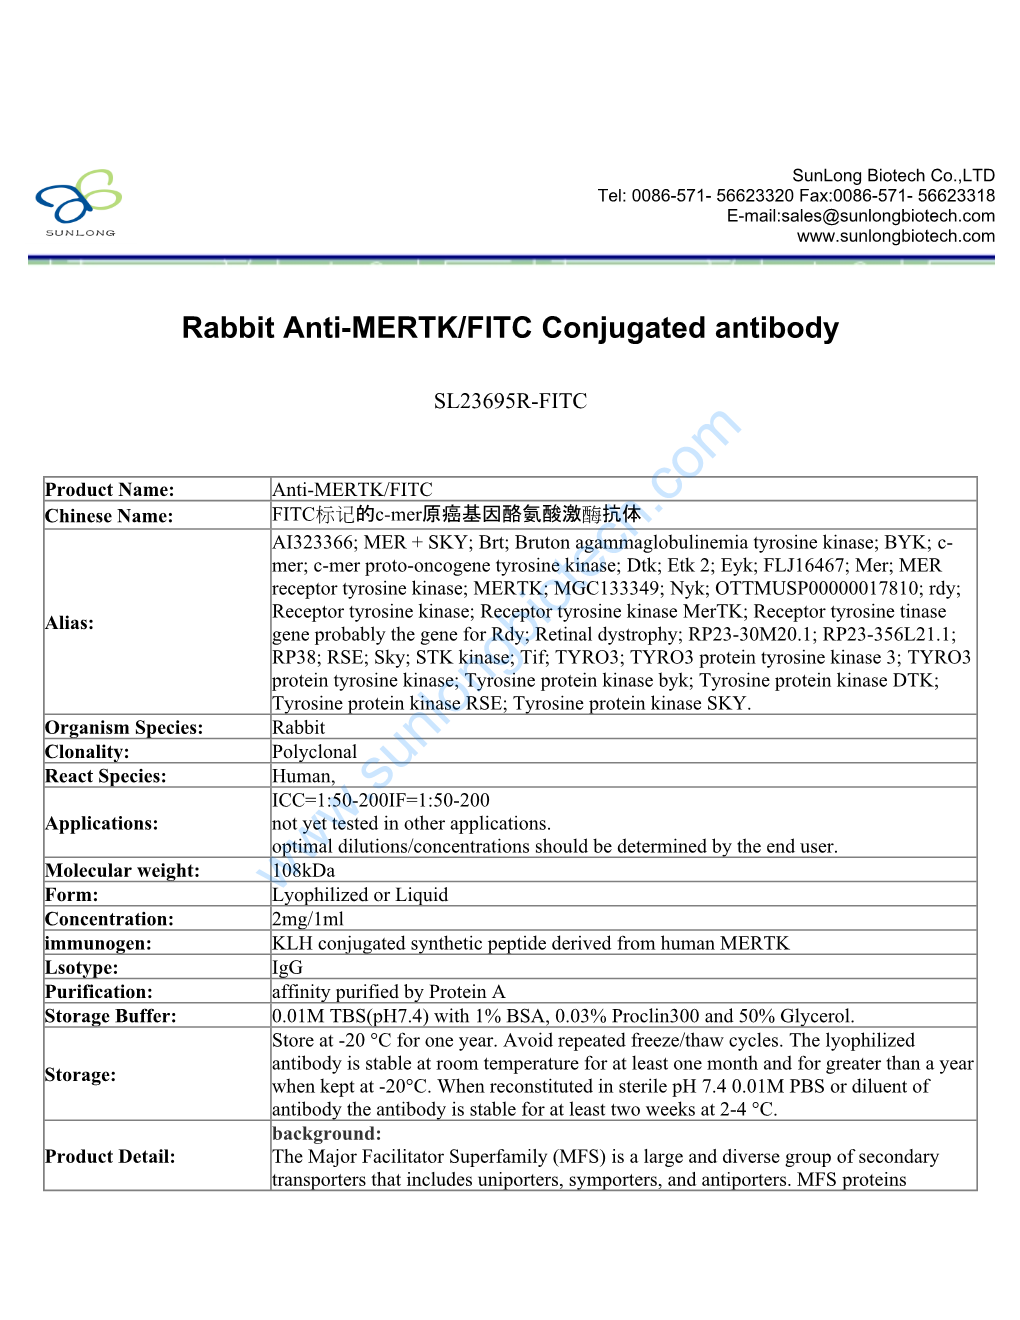 Rabbit Anti-MERTK/FITC Conjugated Antibody-SL23695R-FITC